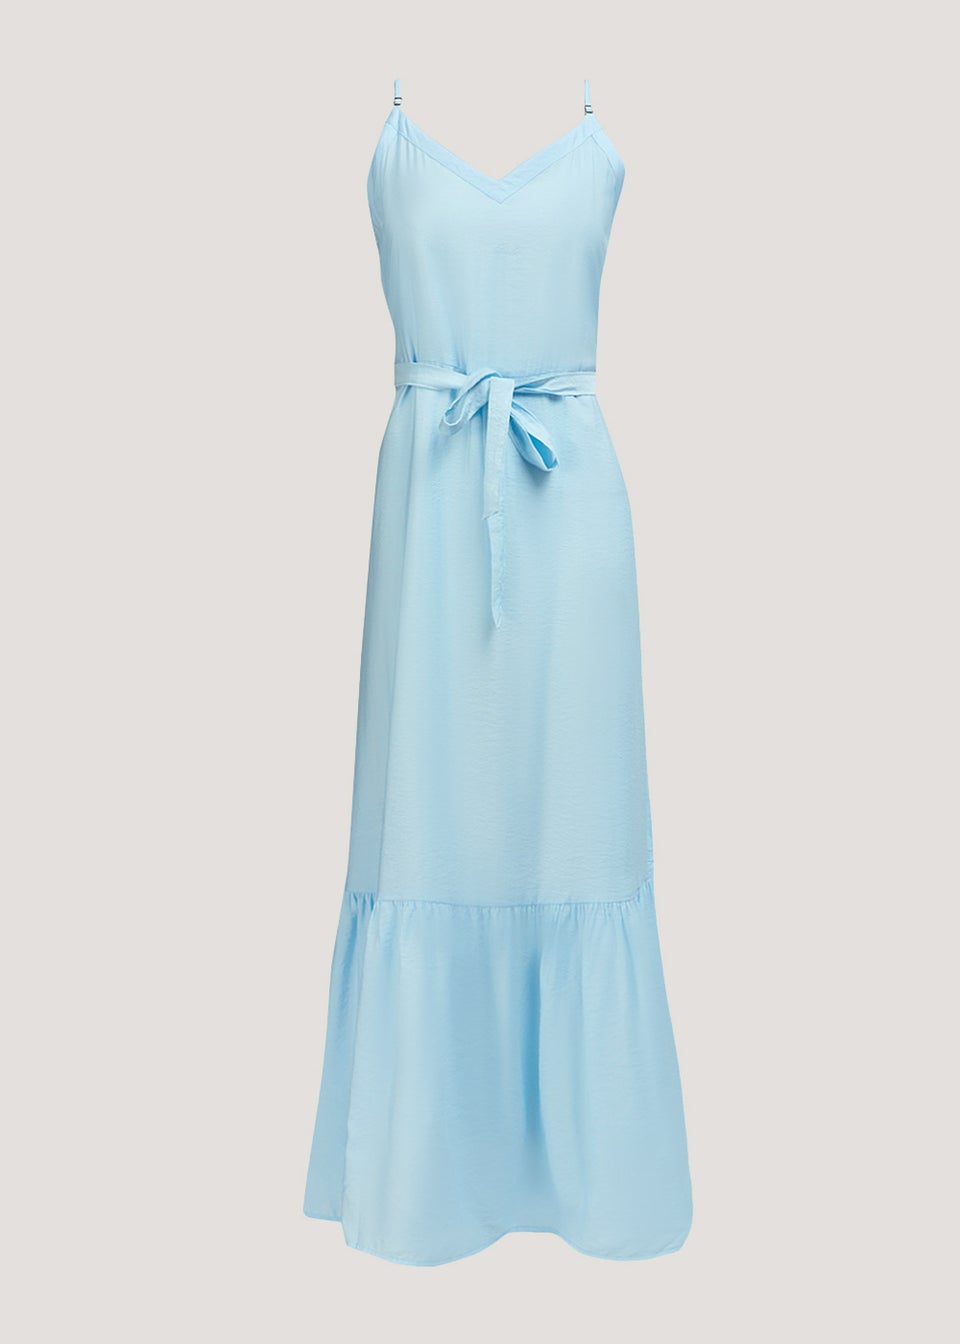 JDY Monroe Blue Dress